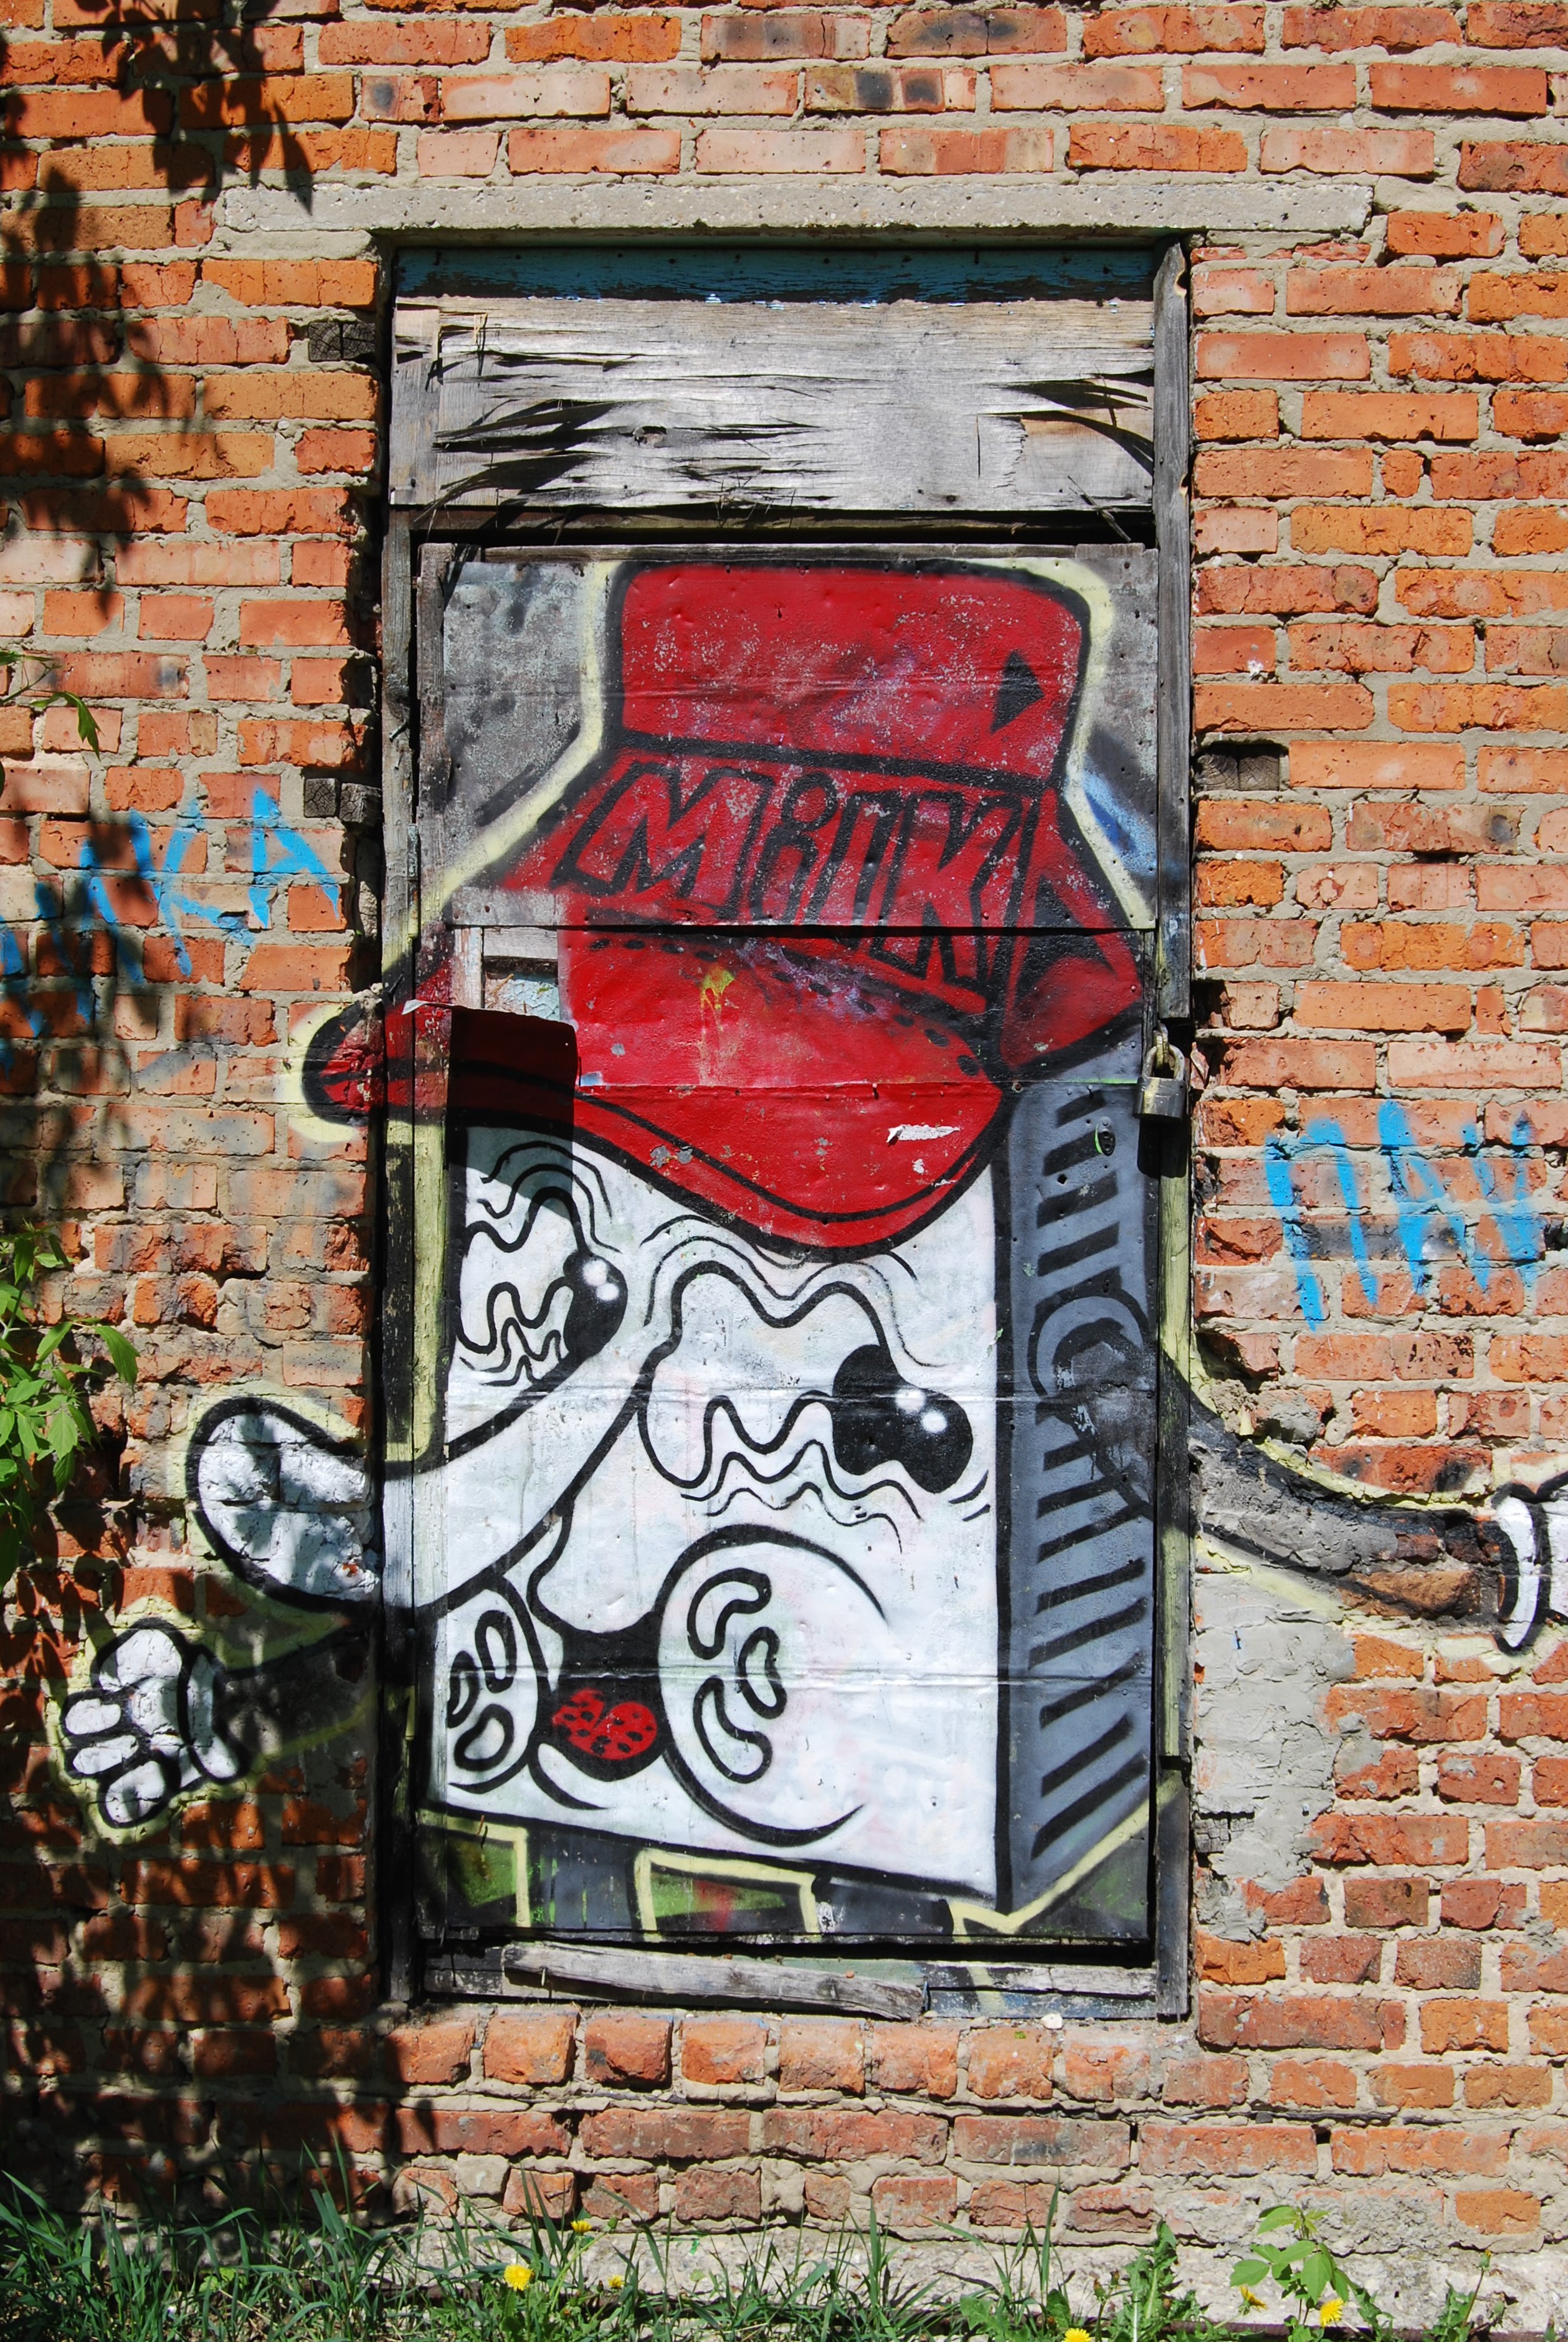 Граффити (снимок за 10.05.18) У д. № 44 по ул. Механизаторов